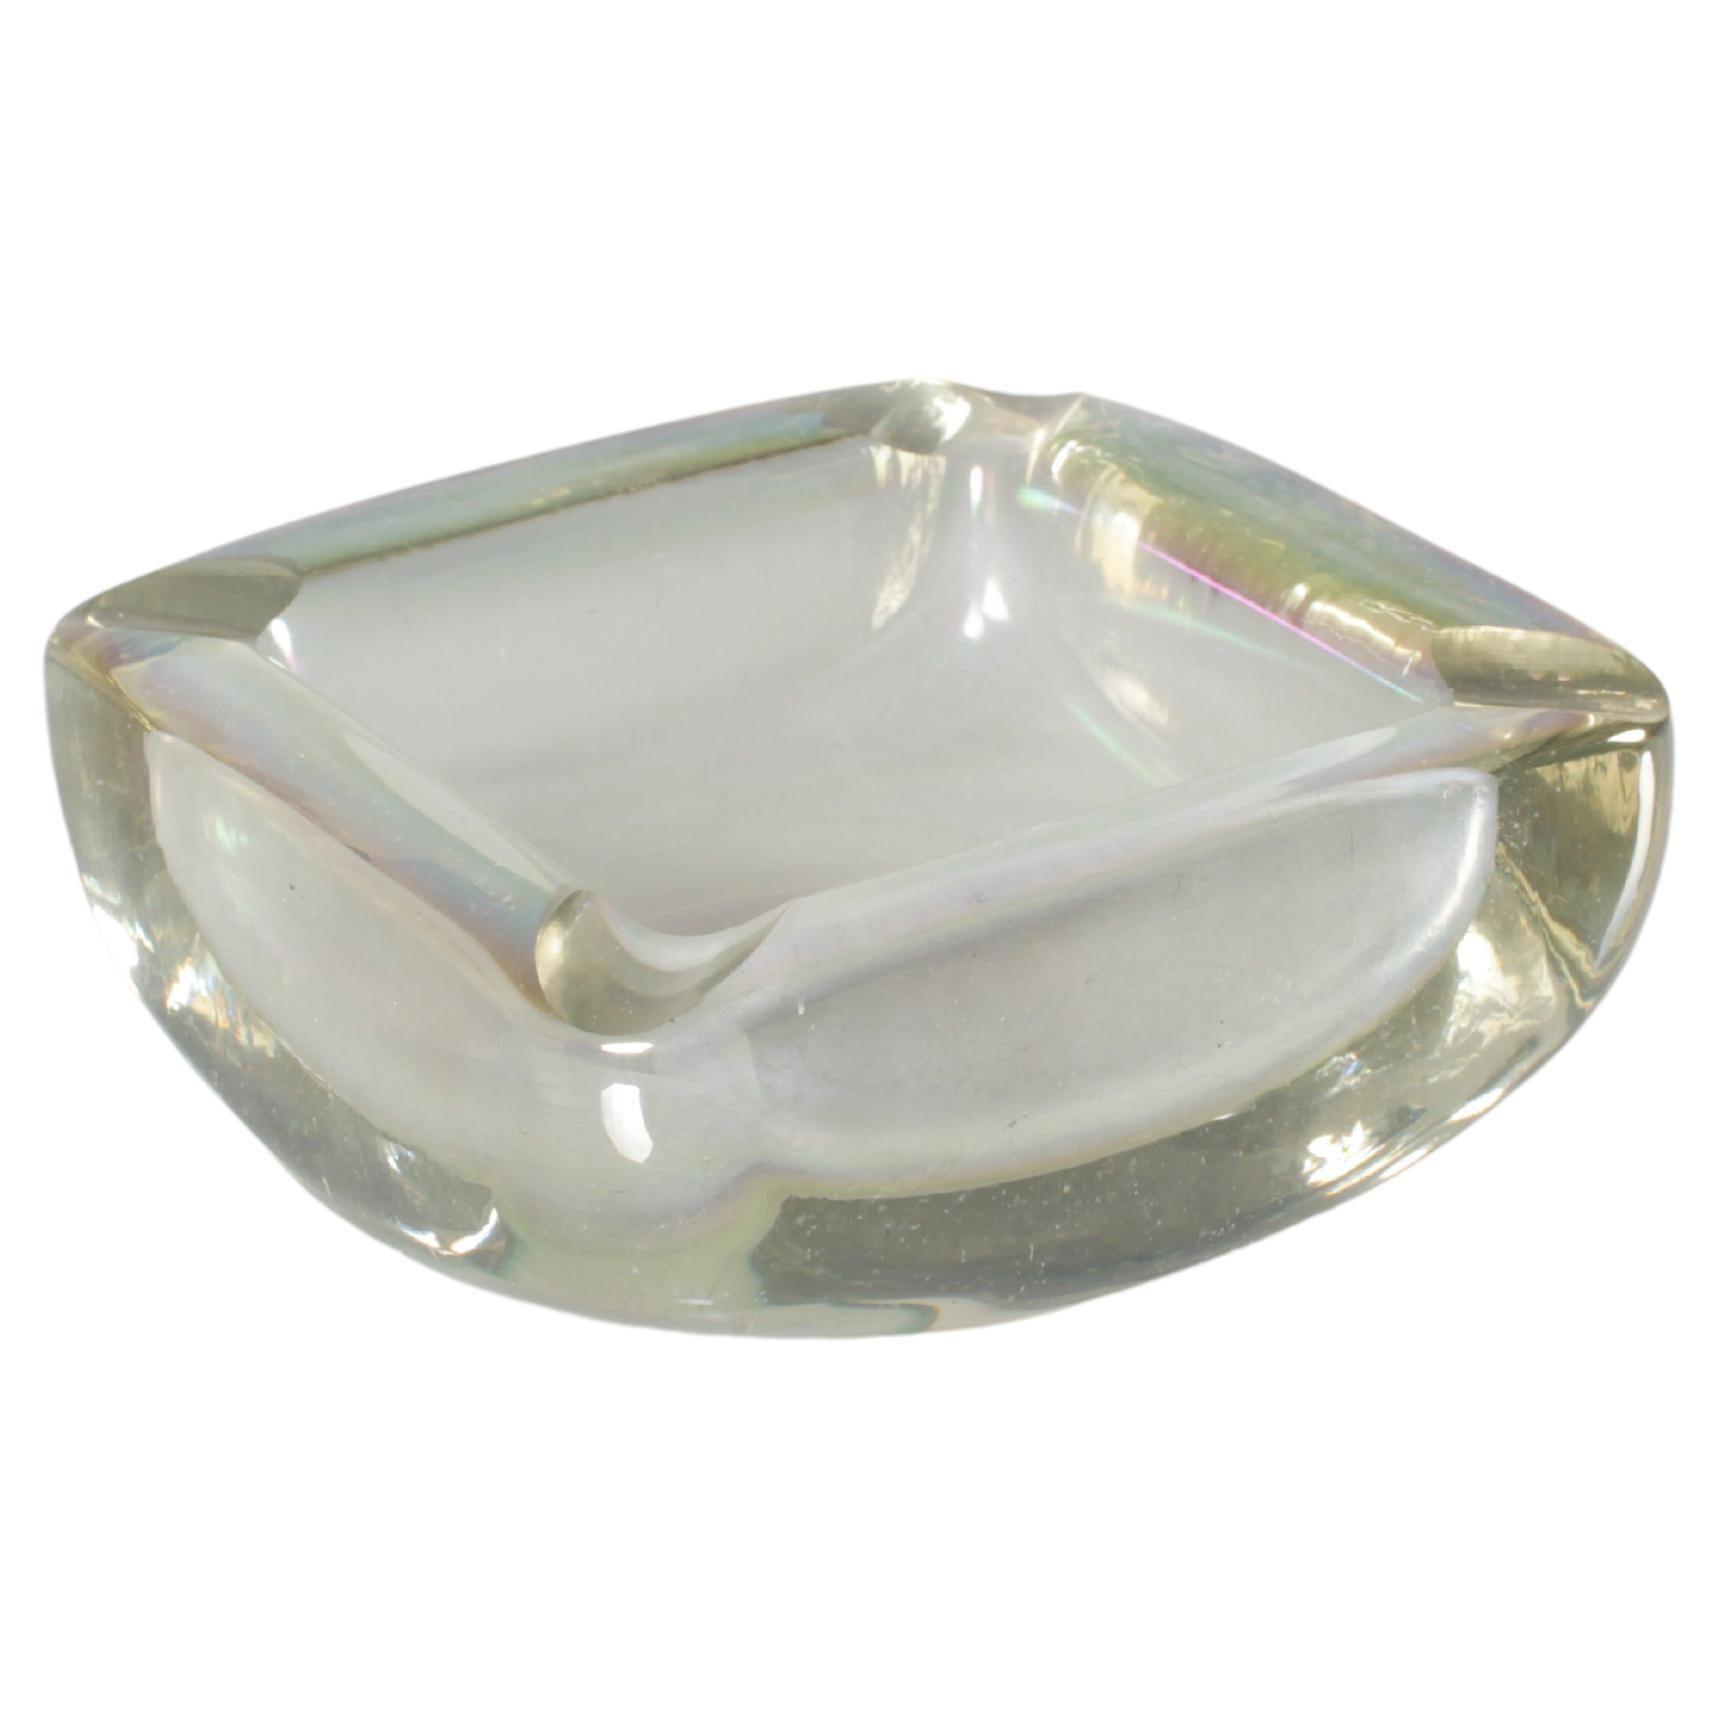 A. Seguso Thick Iridescent Murano Glass Ashtray 40s Italy